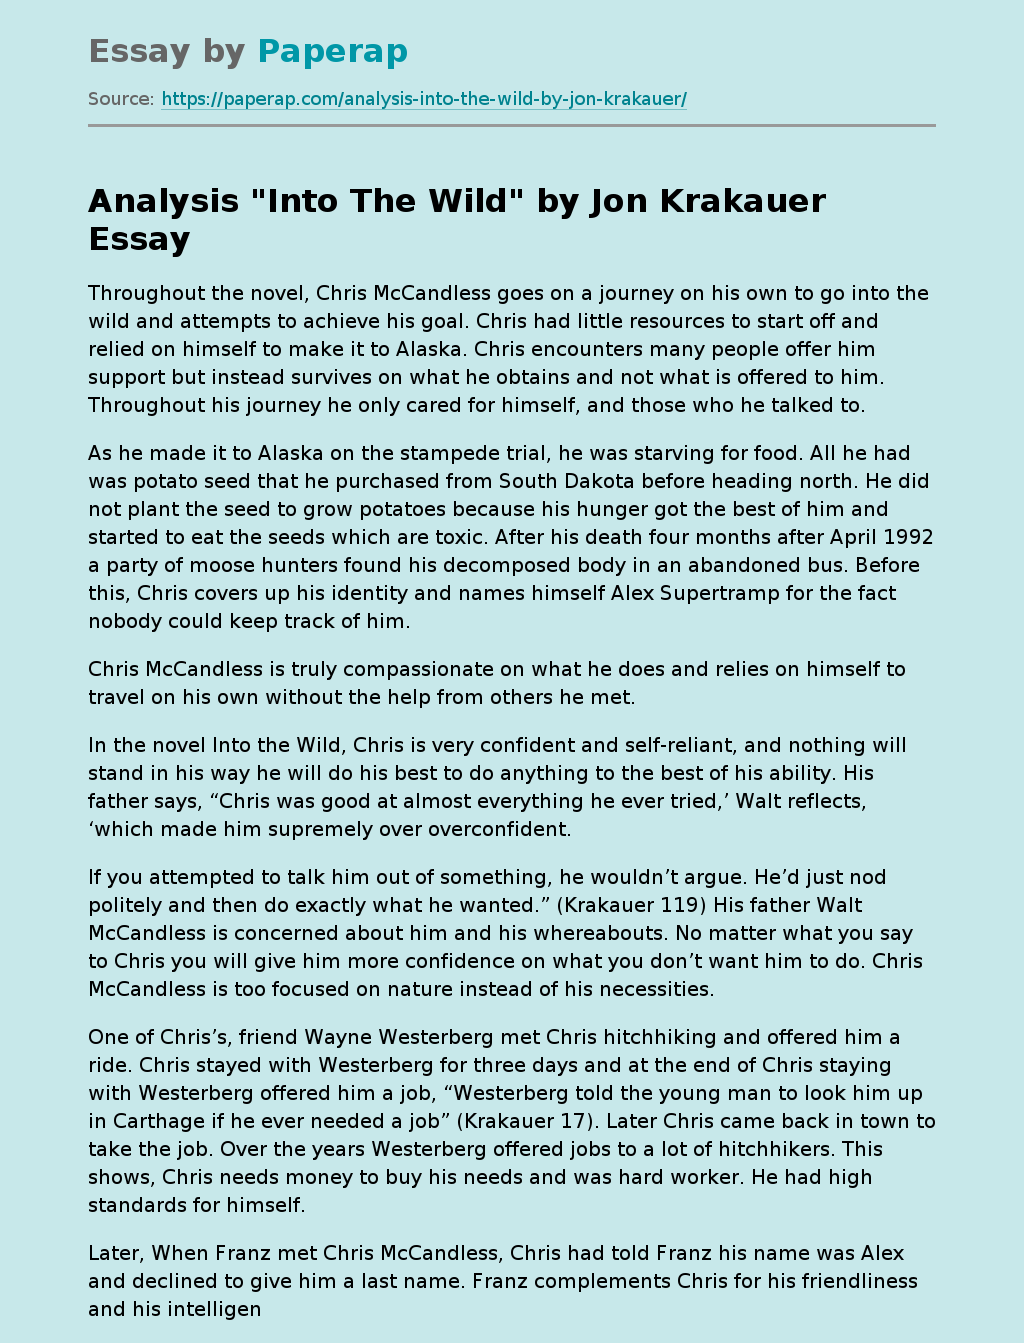 Analysis "Into The Wild" by Jon Krakauer